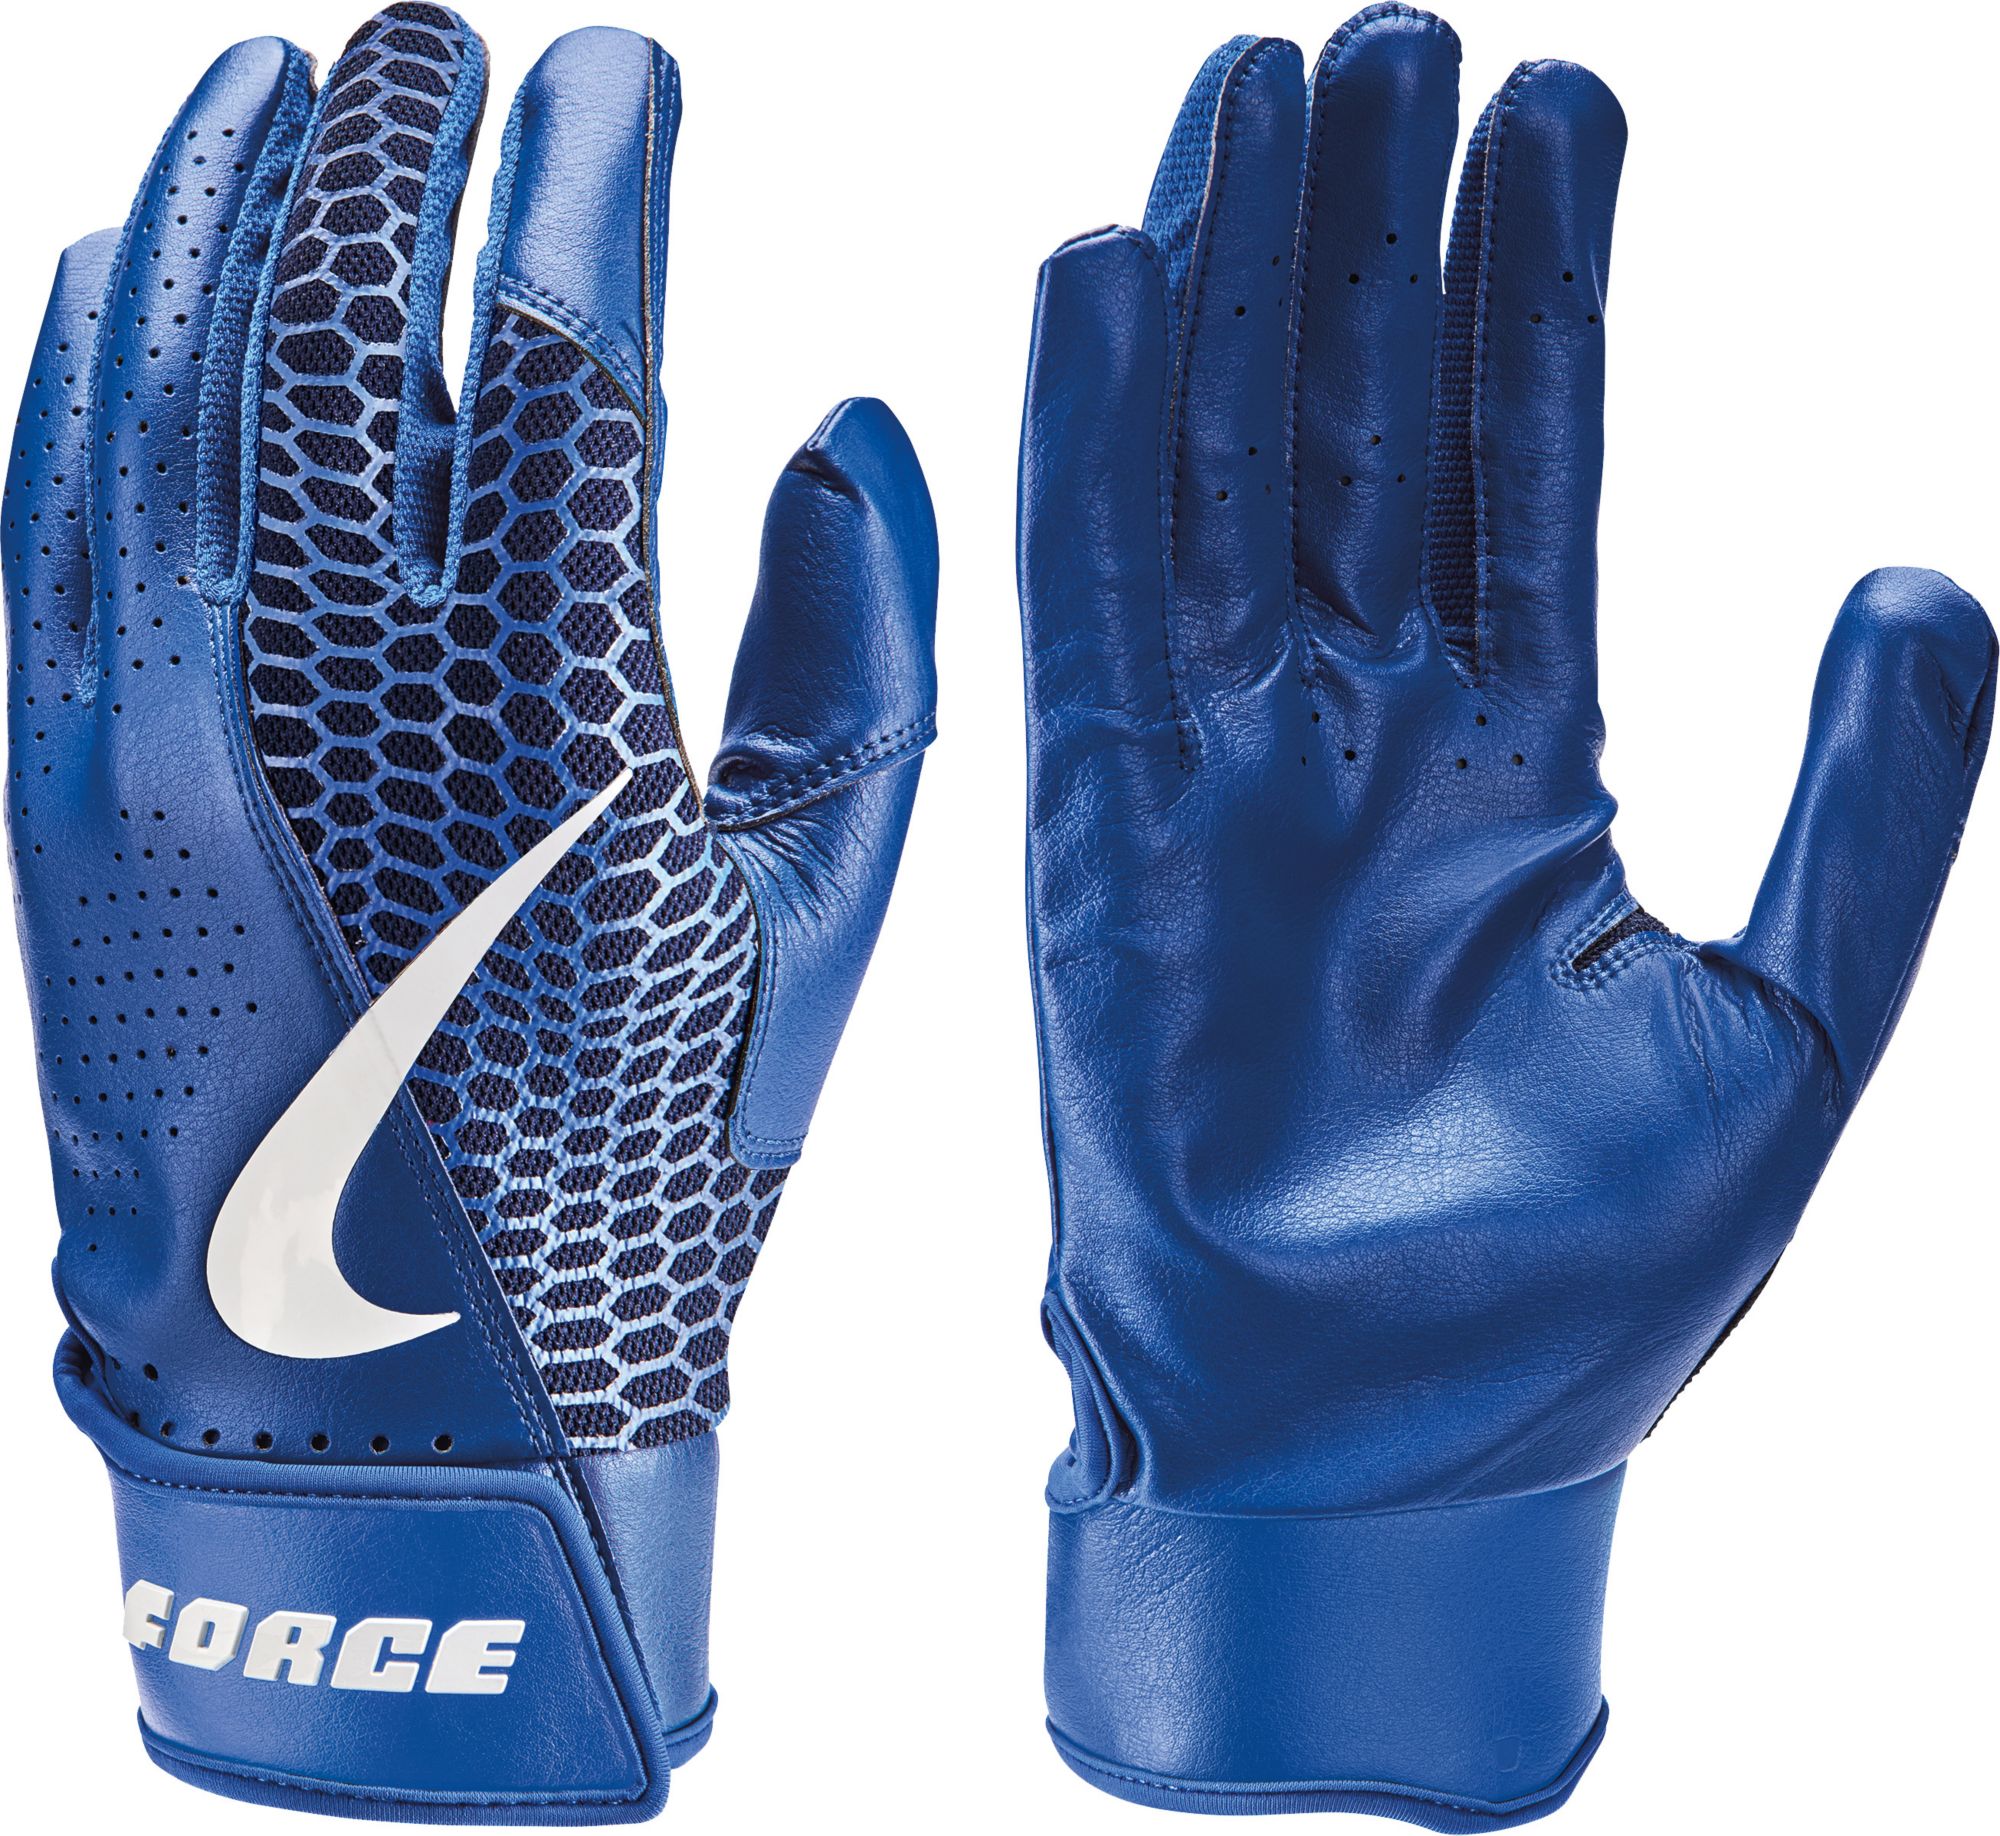 nike force batting gloves